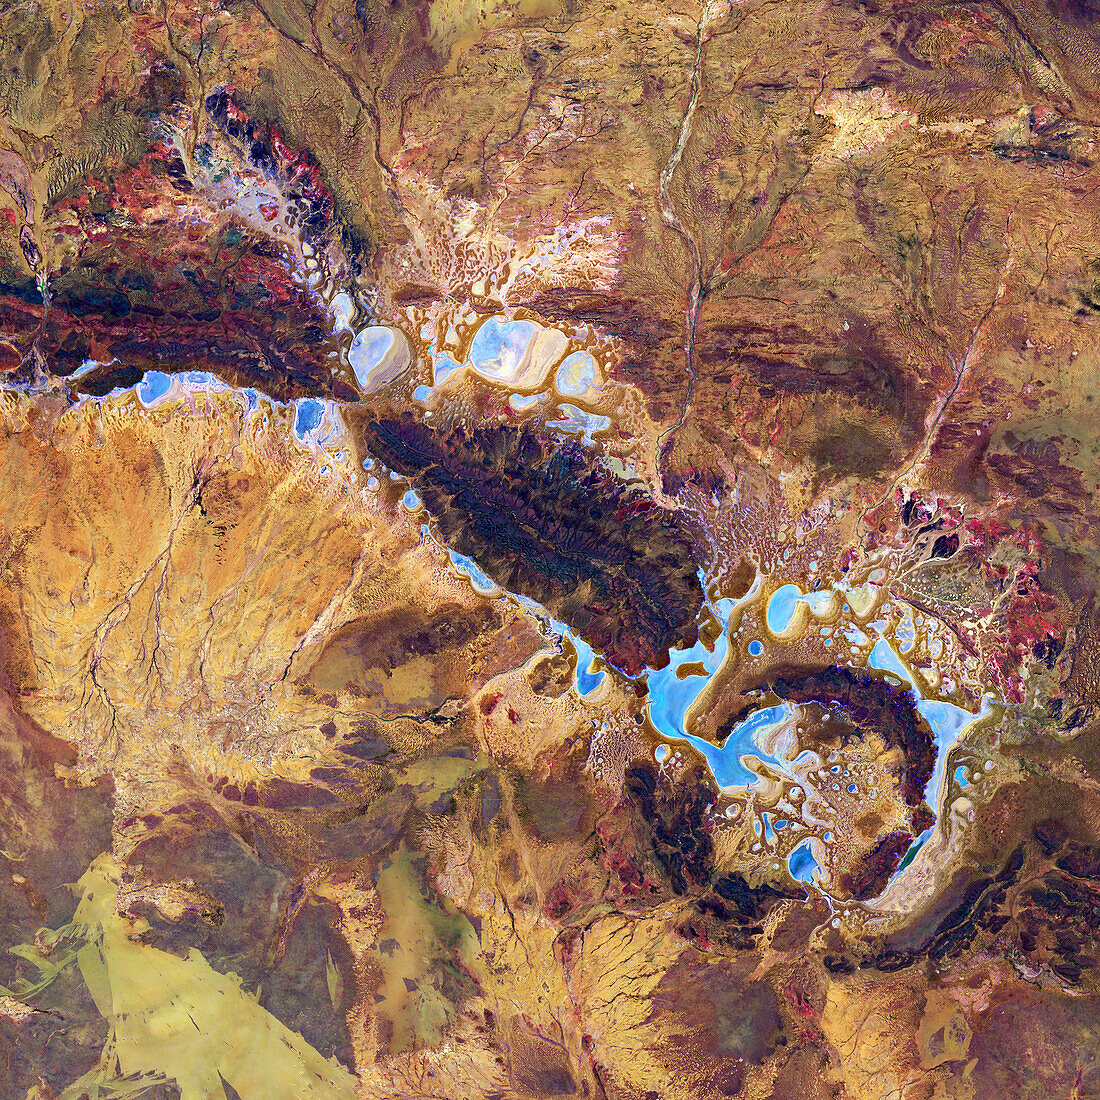 Shoemaker impact structure, Australia, satellite image